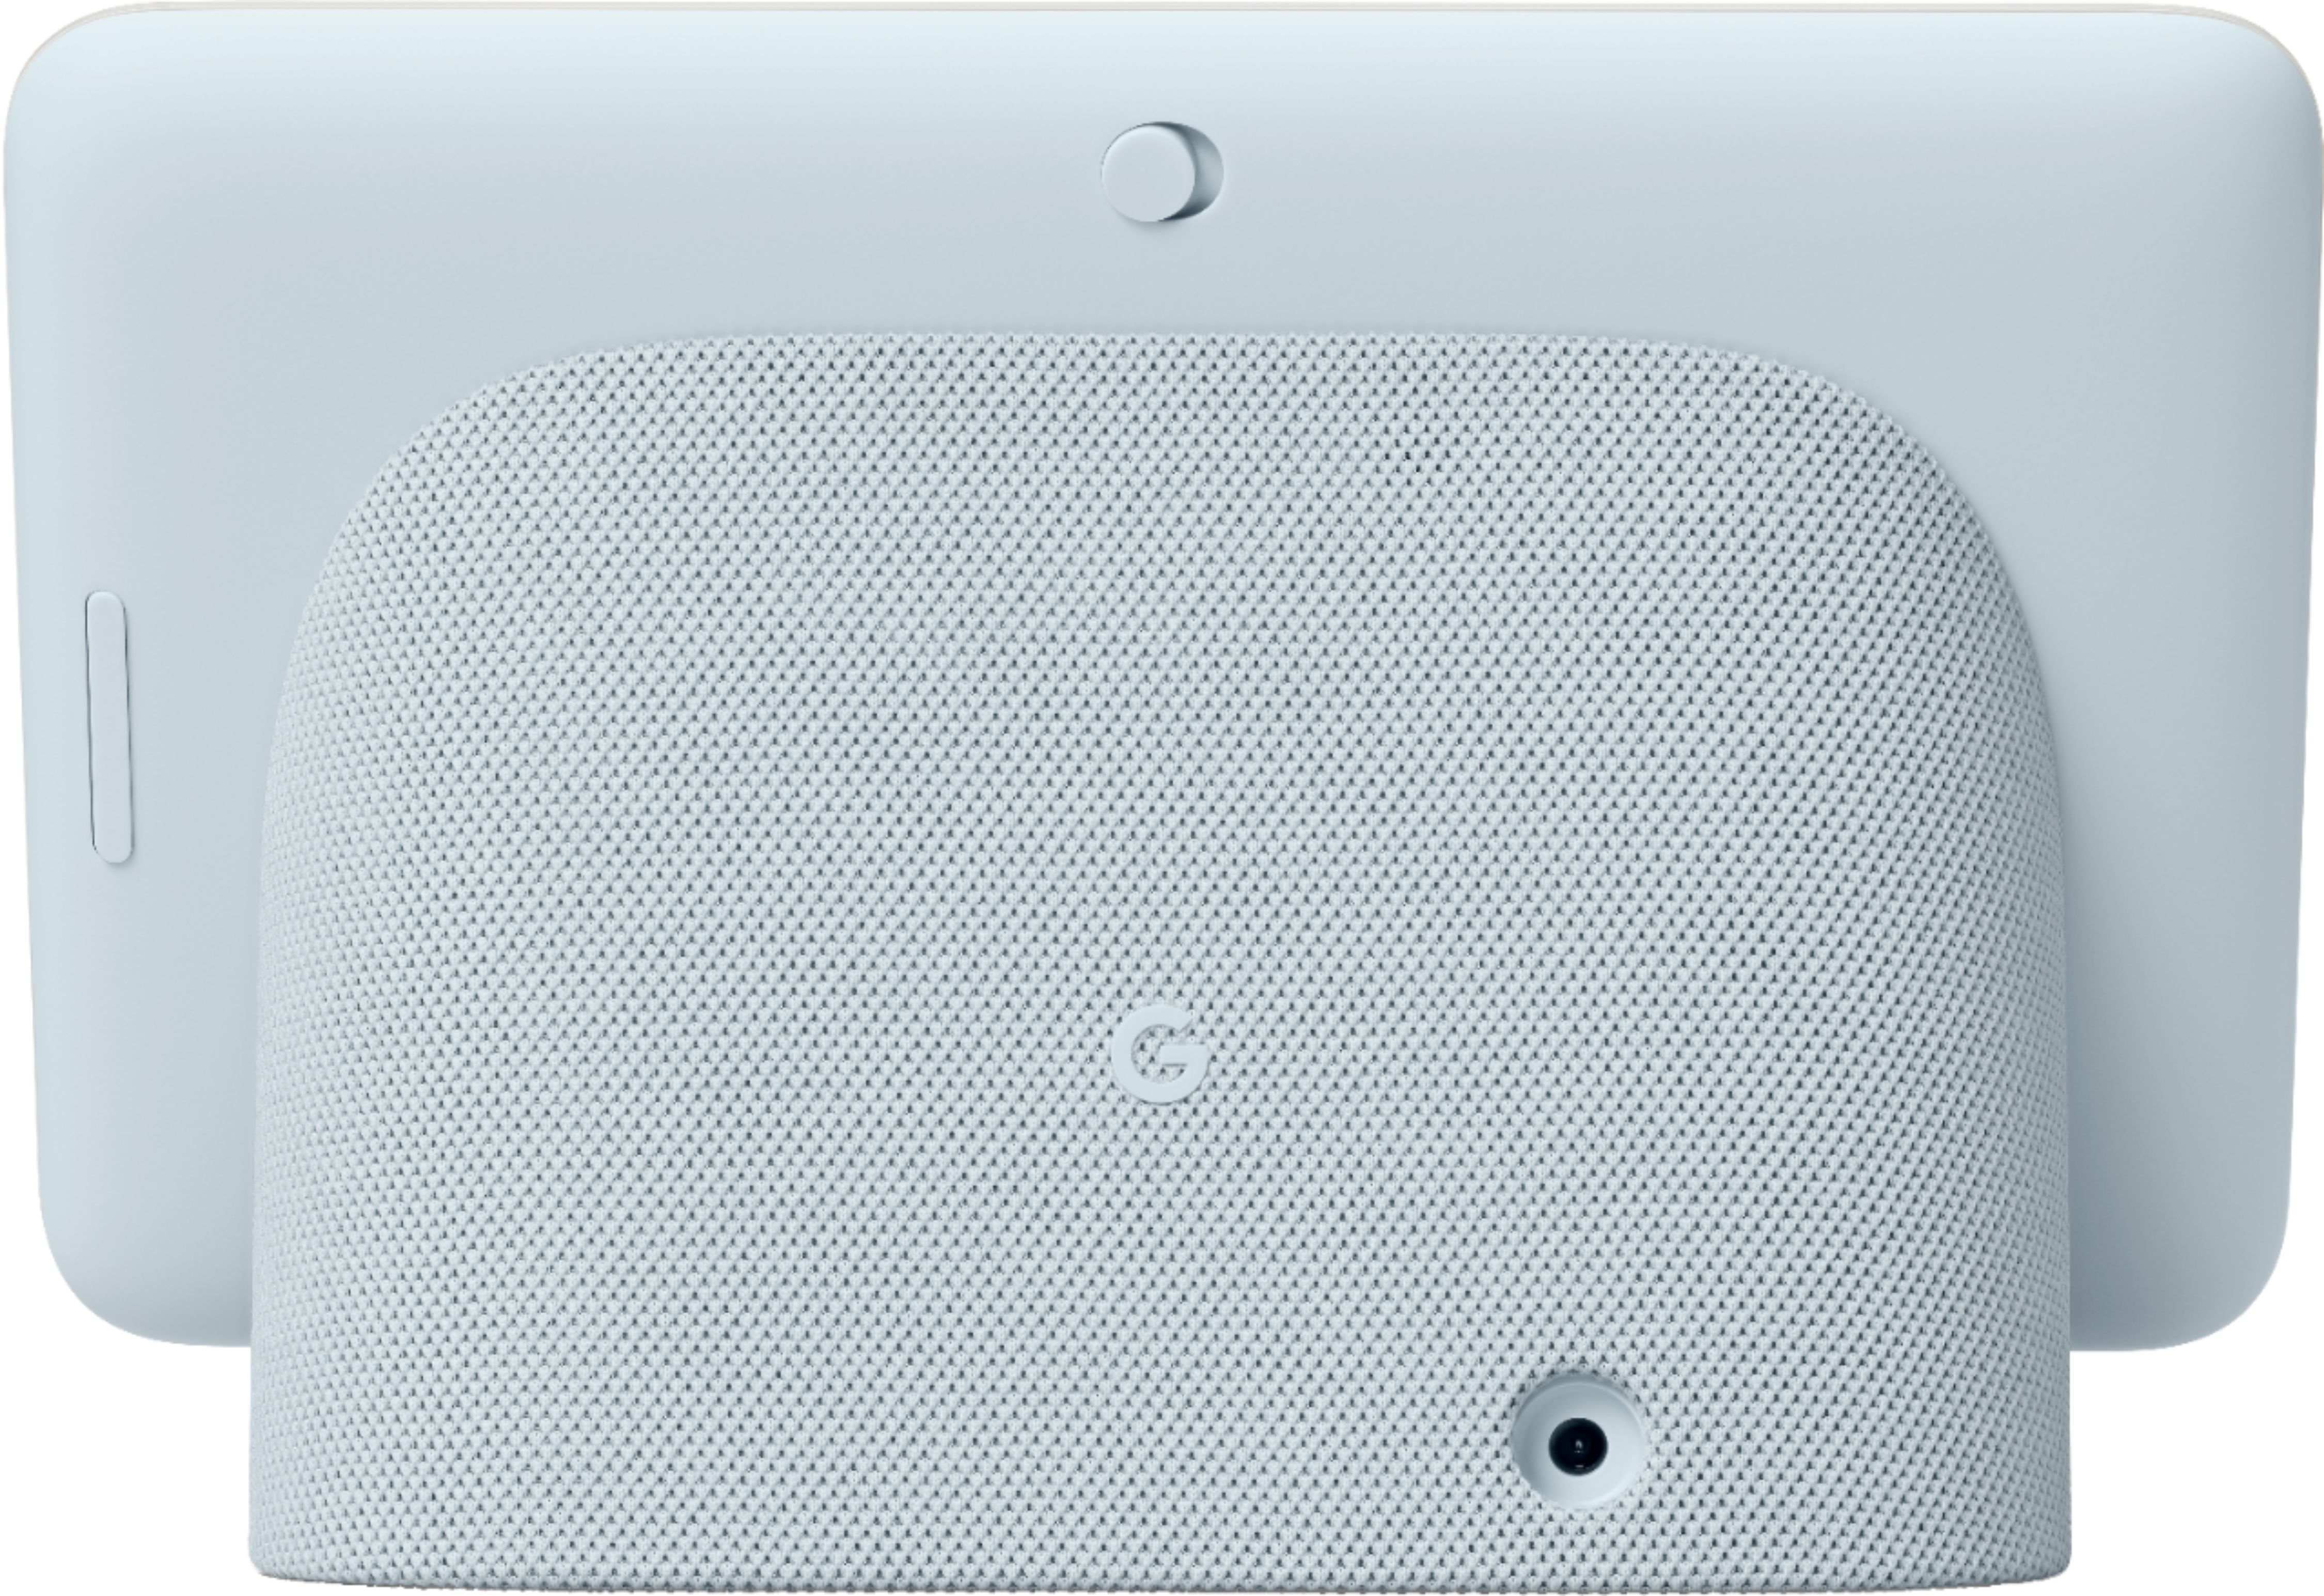 Google Nest Hub 2nd Gen - Smart Home Display with Google Assistant - Chalk  